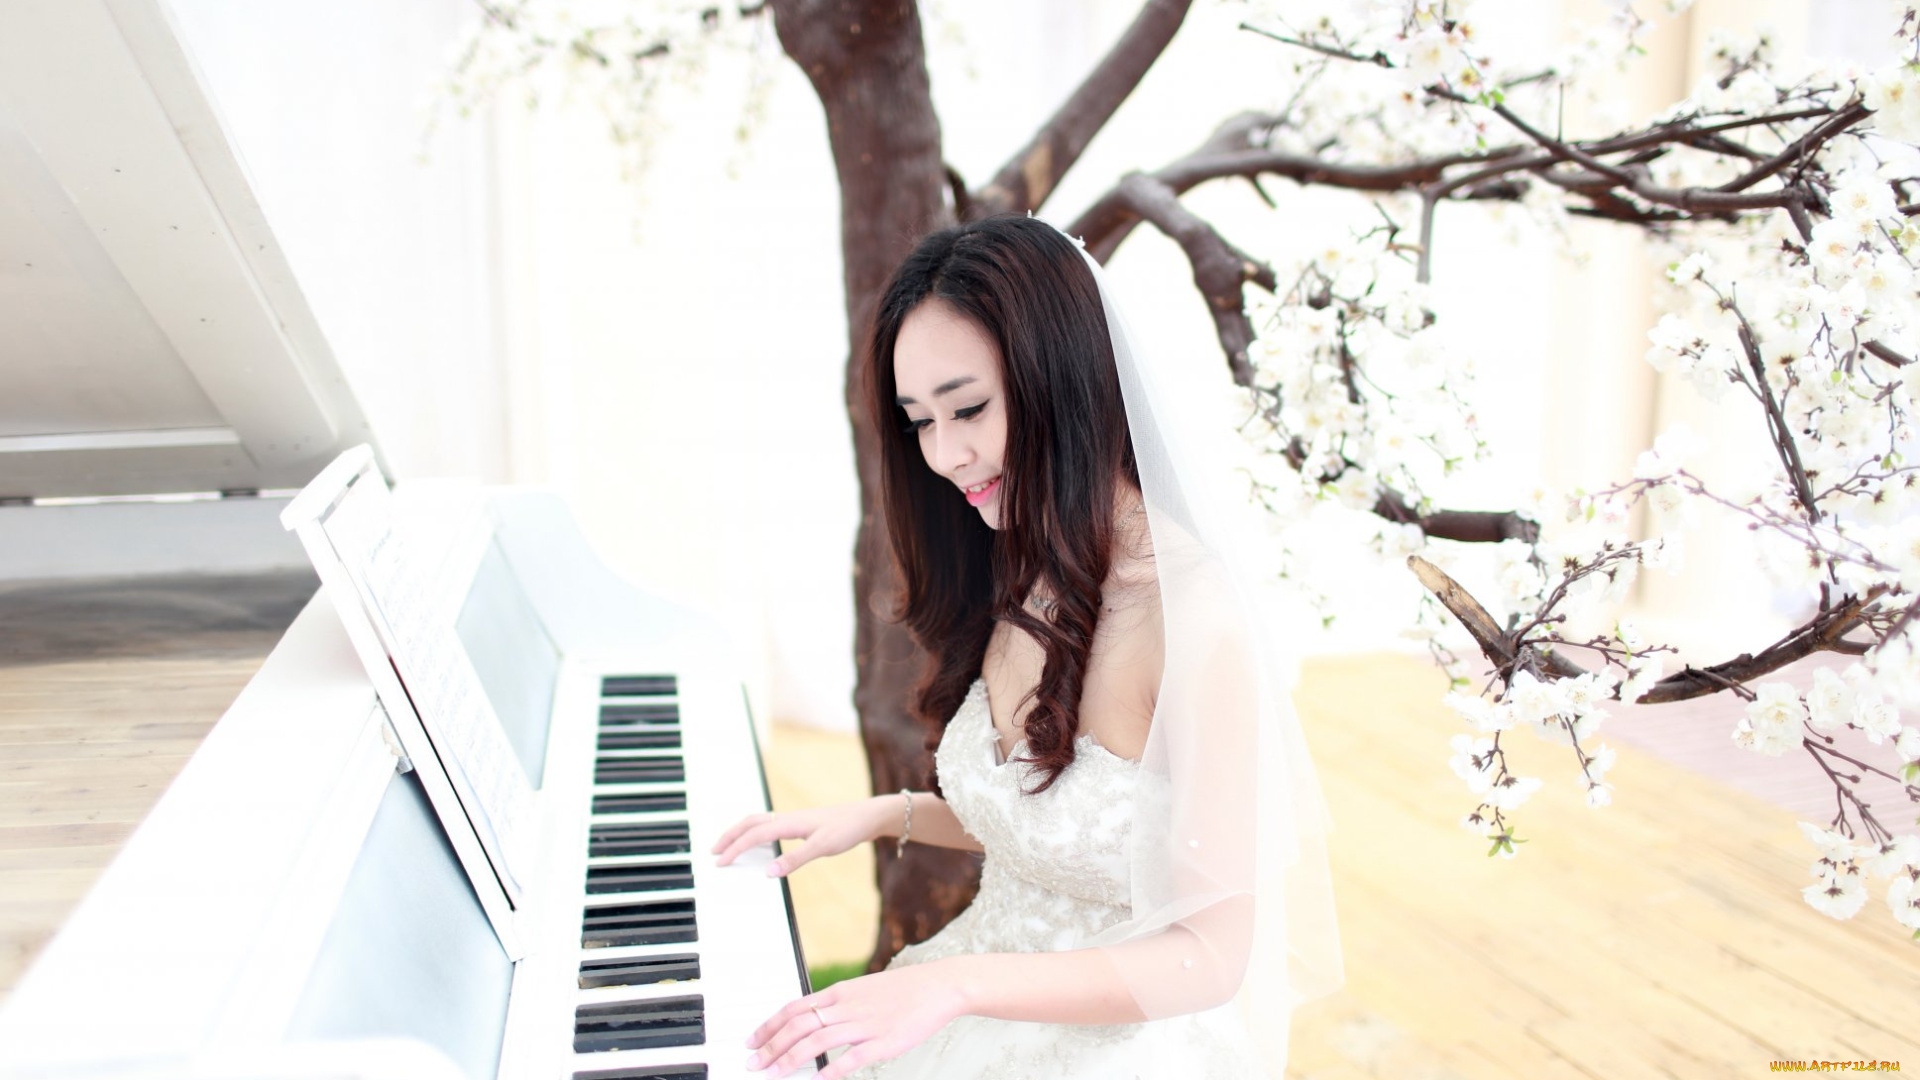 музыка, -другое, дерево, невеста, азиатка, пианино, девушка